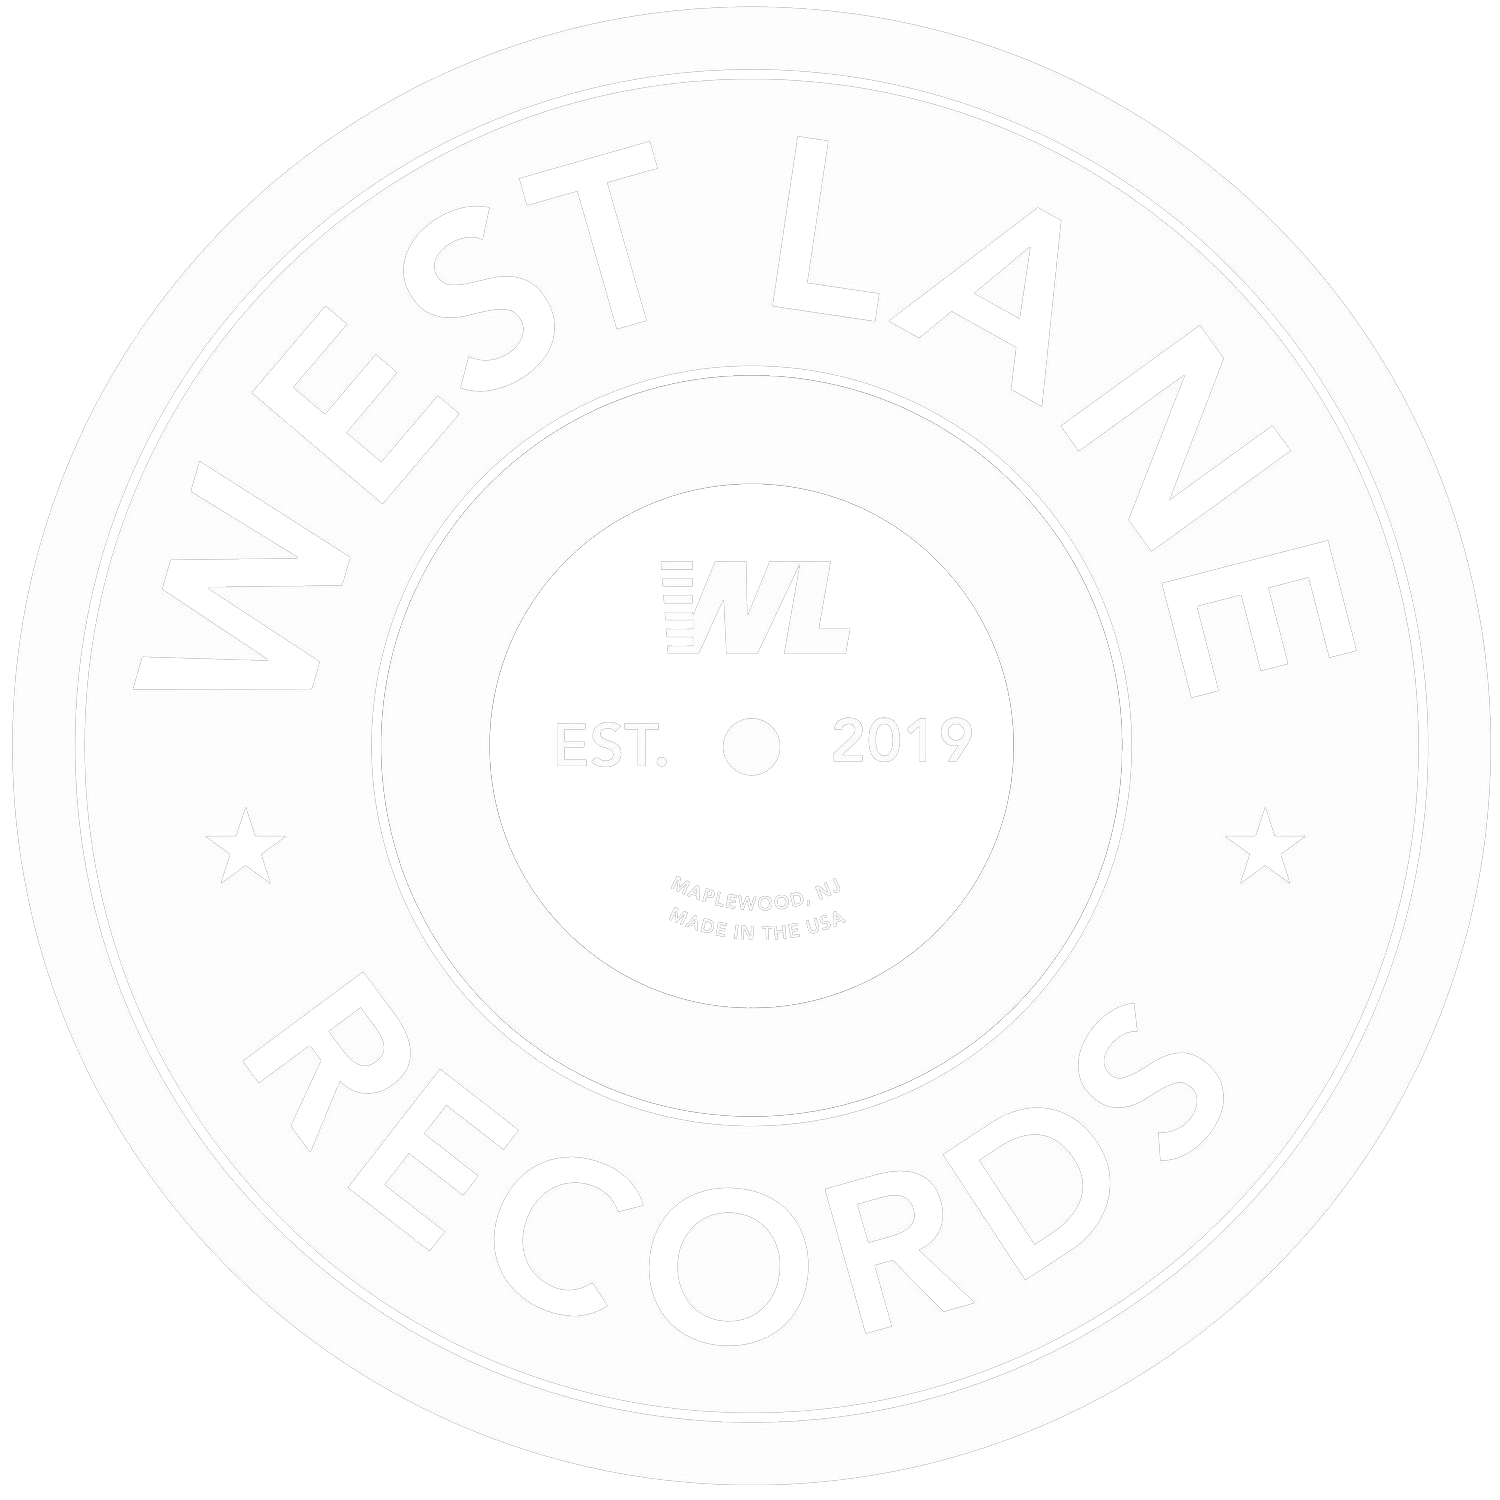 West Lane Records